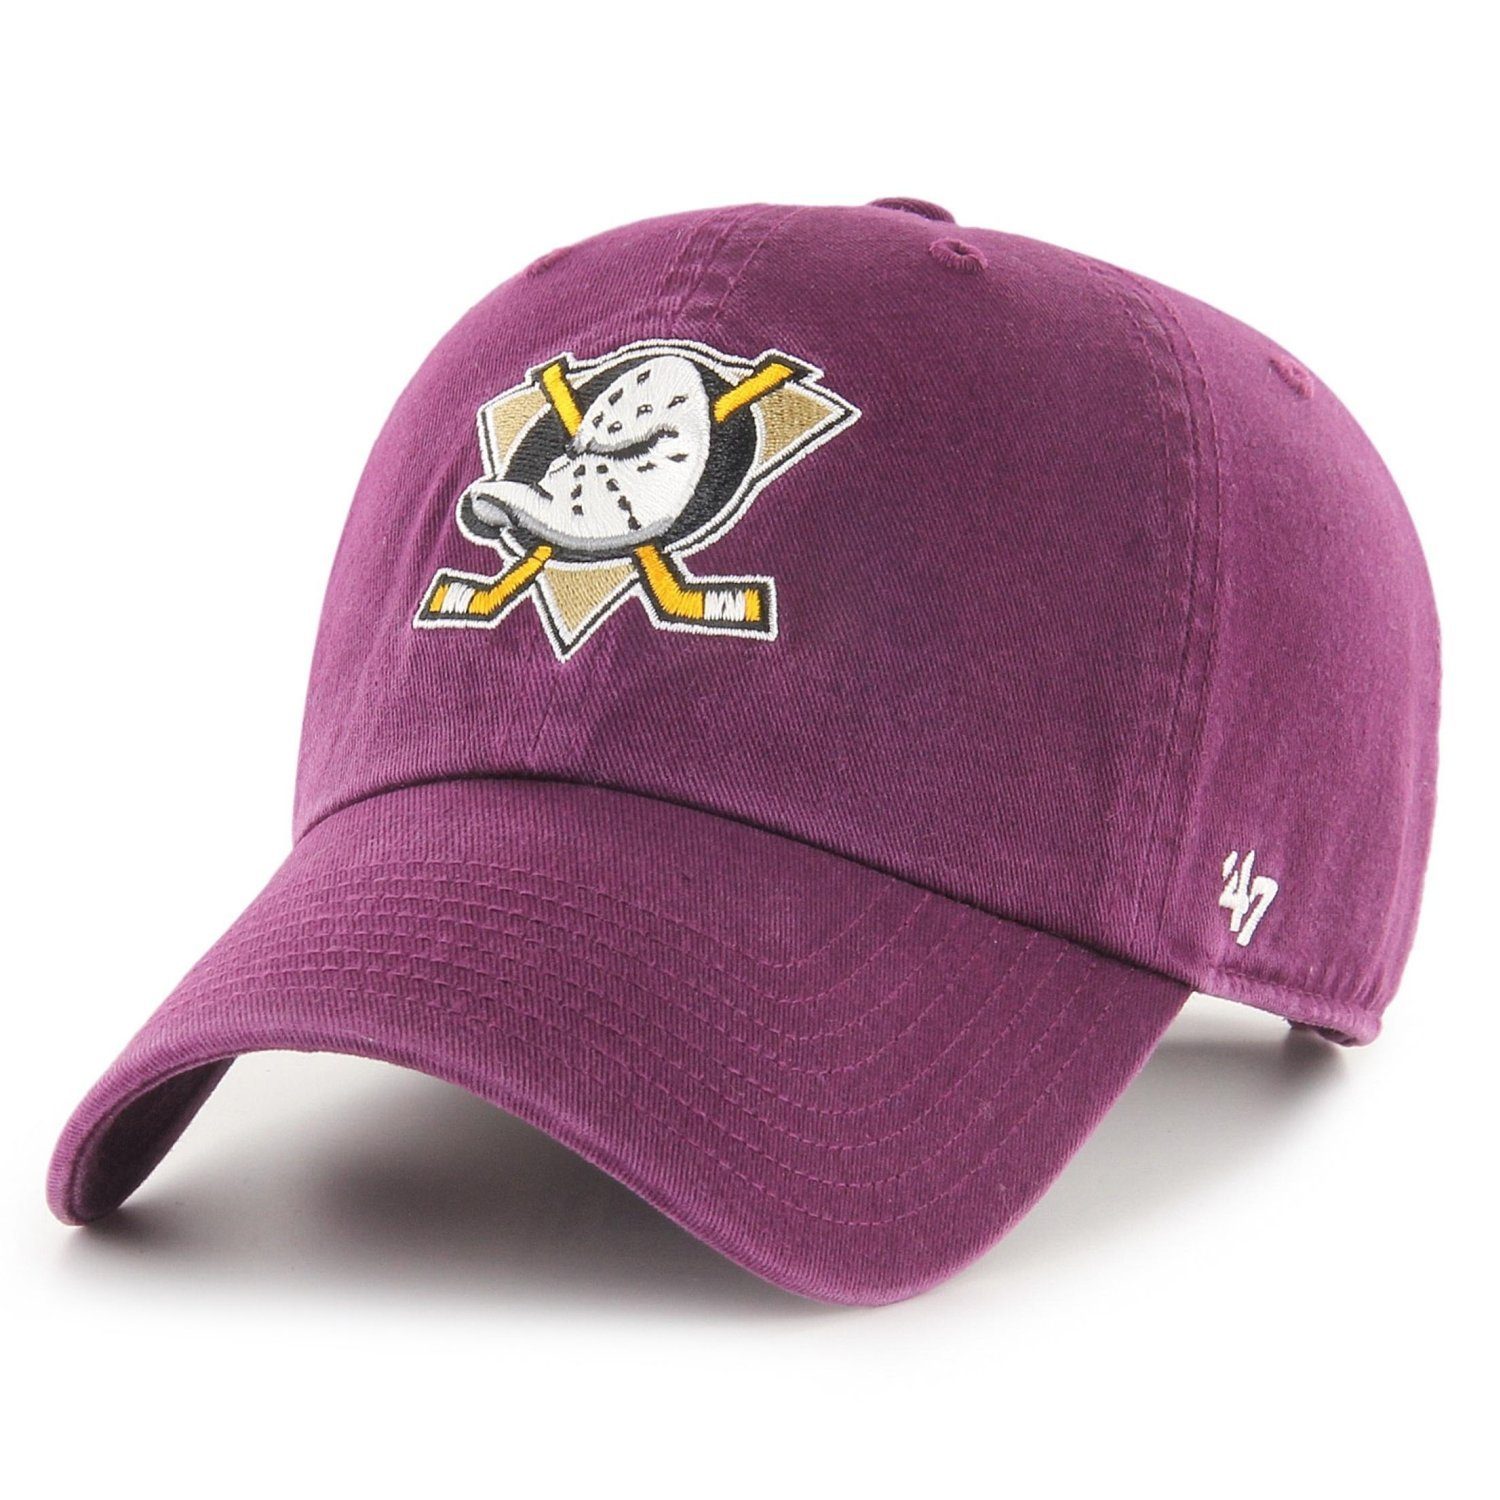 Brand UP '47 plum CLEAN Cap Ducks Baseball Anaheim